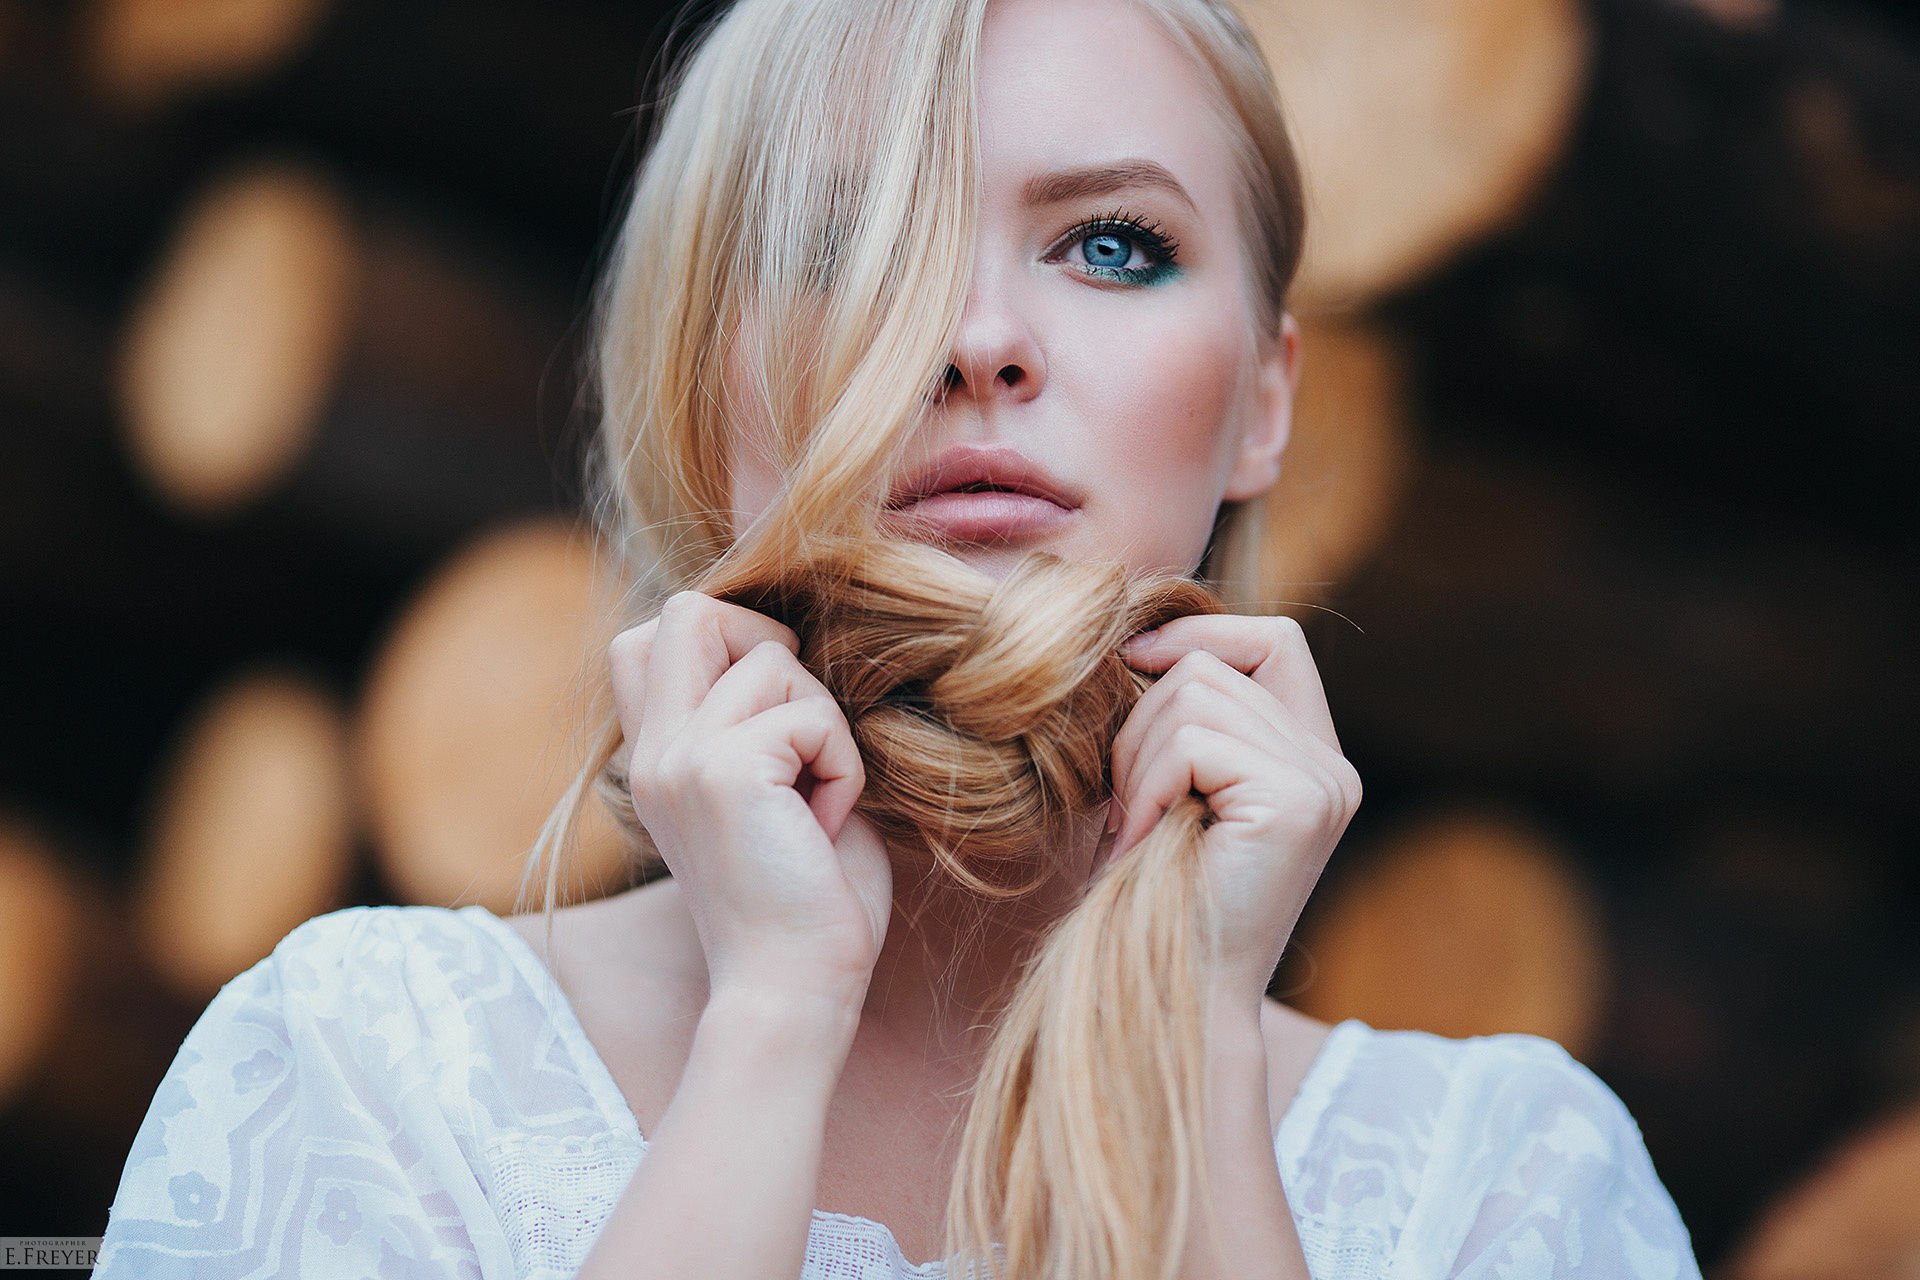 Download Braid Blue Eyes Blonde Woman Model Hd Wallpaper By Evgeny Freyer 6088